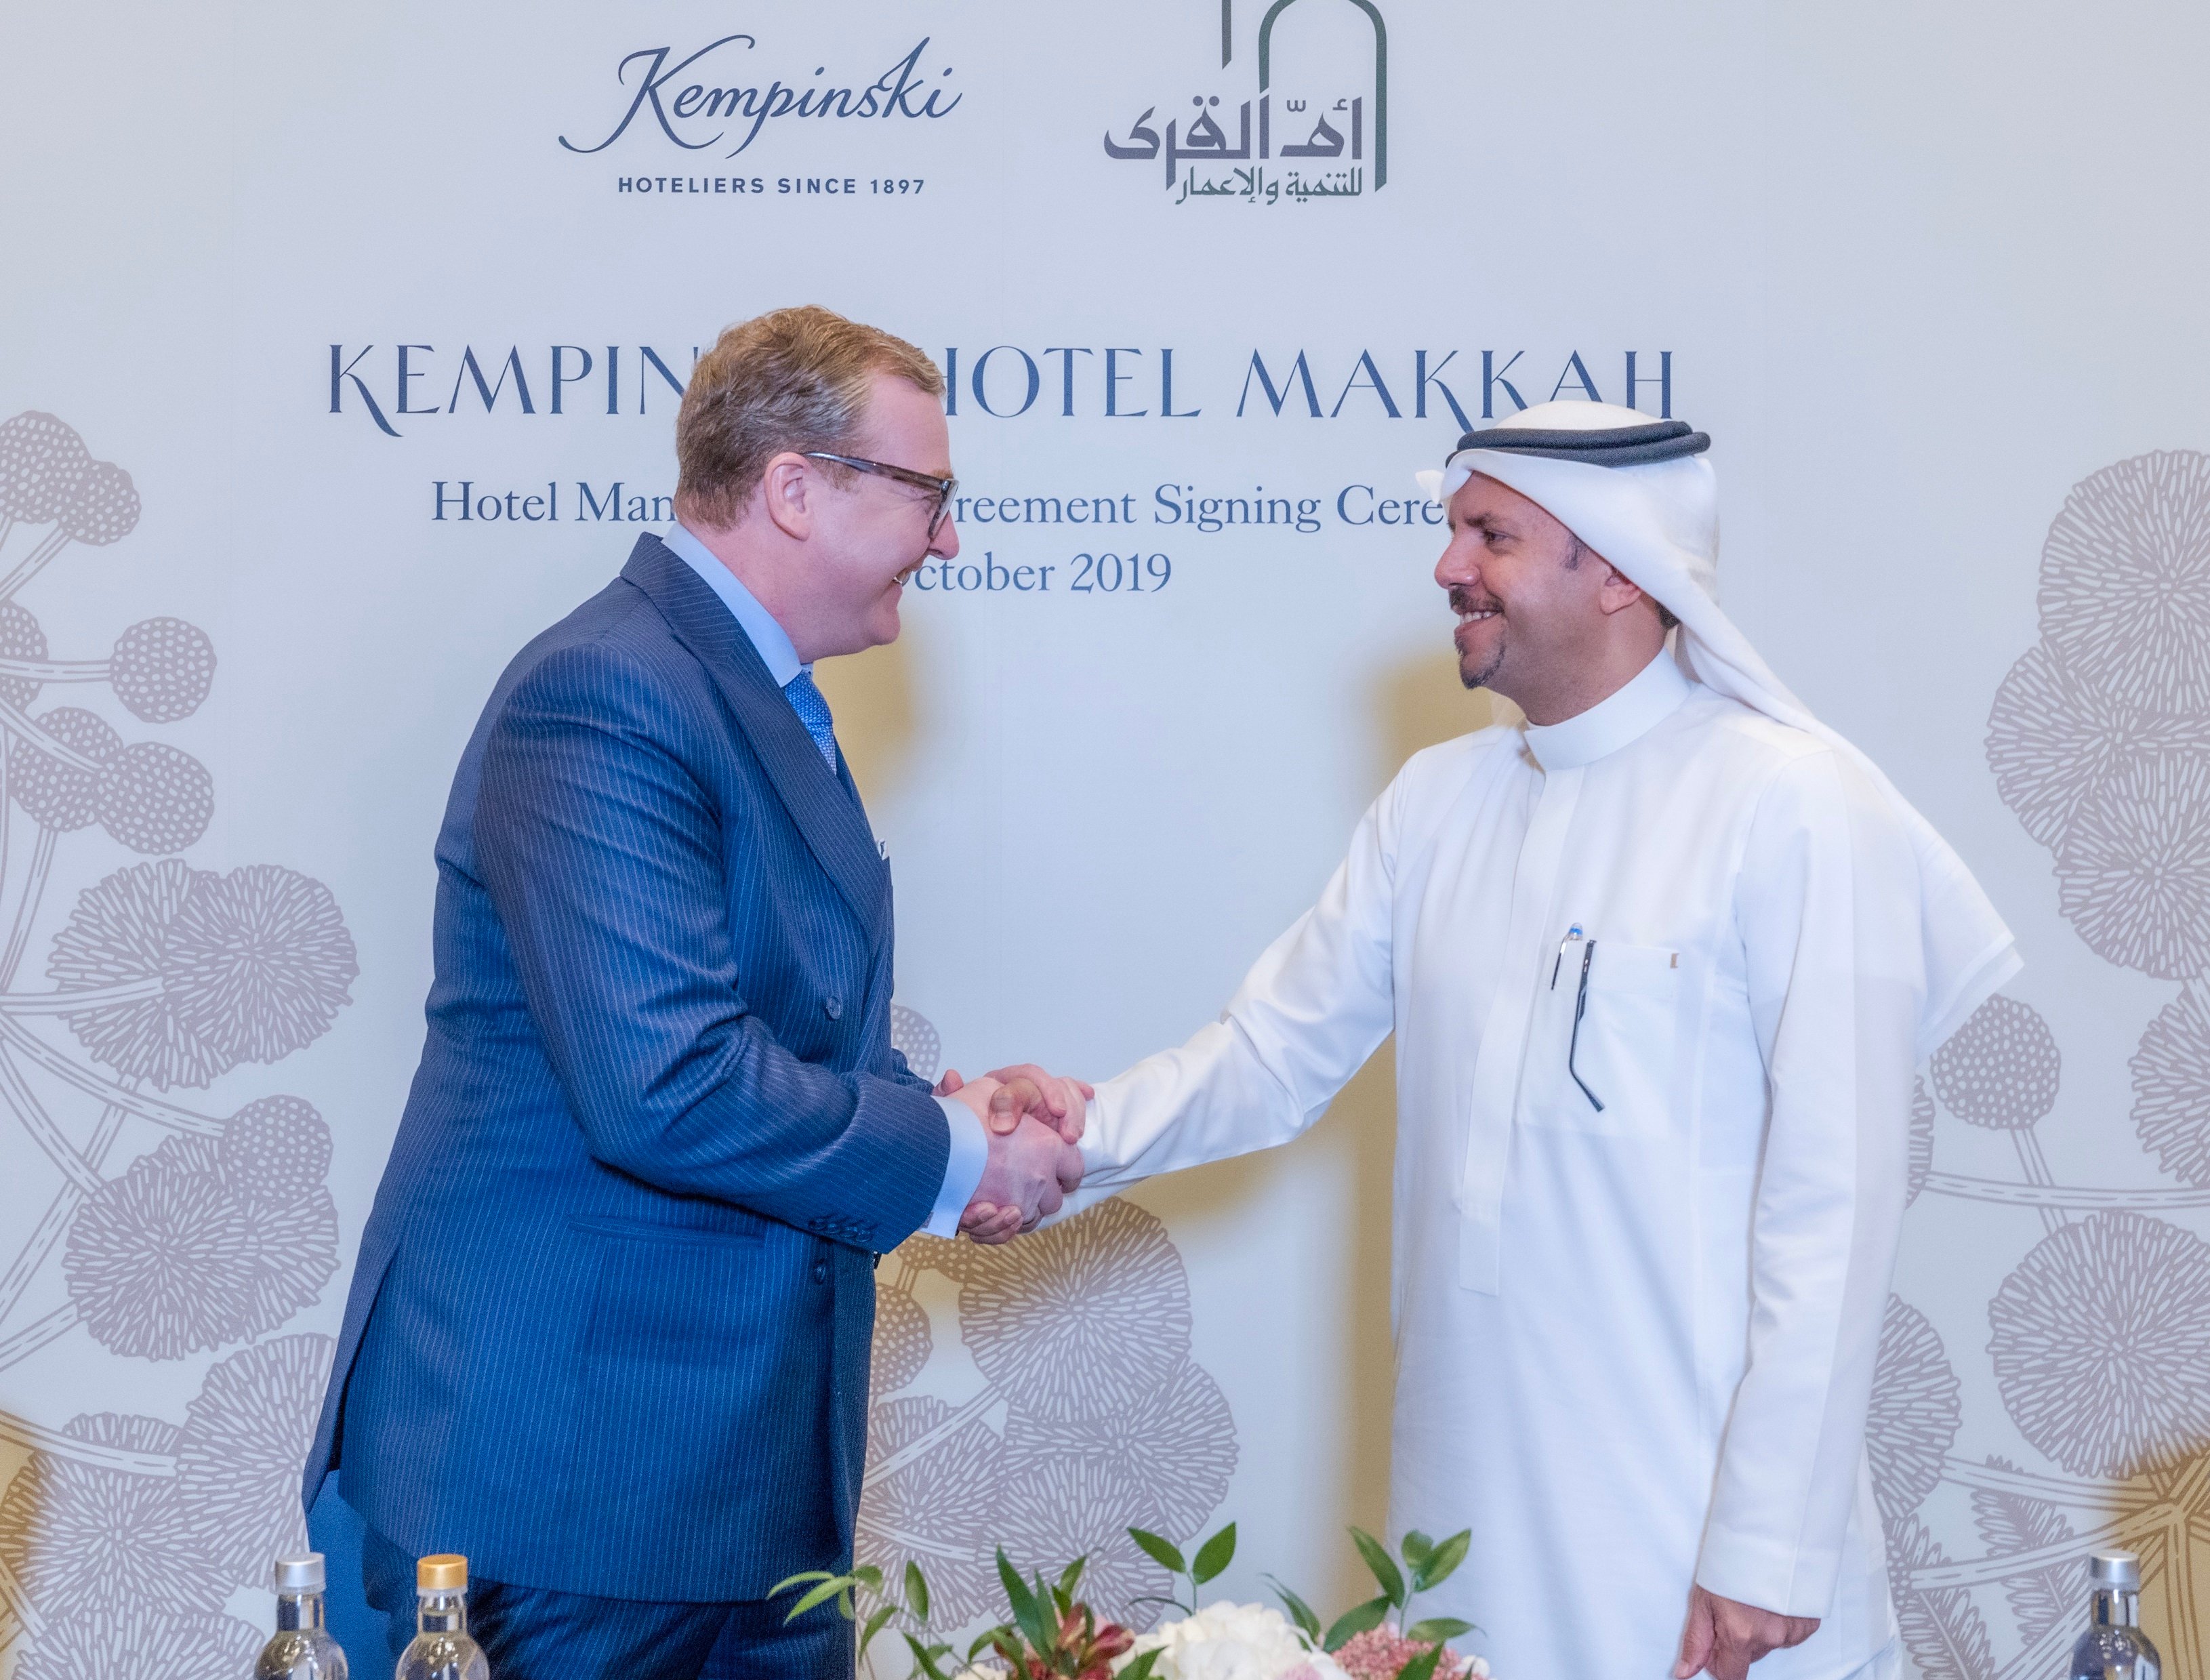 Kempinski Hotel Makkah signing